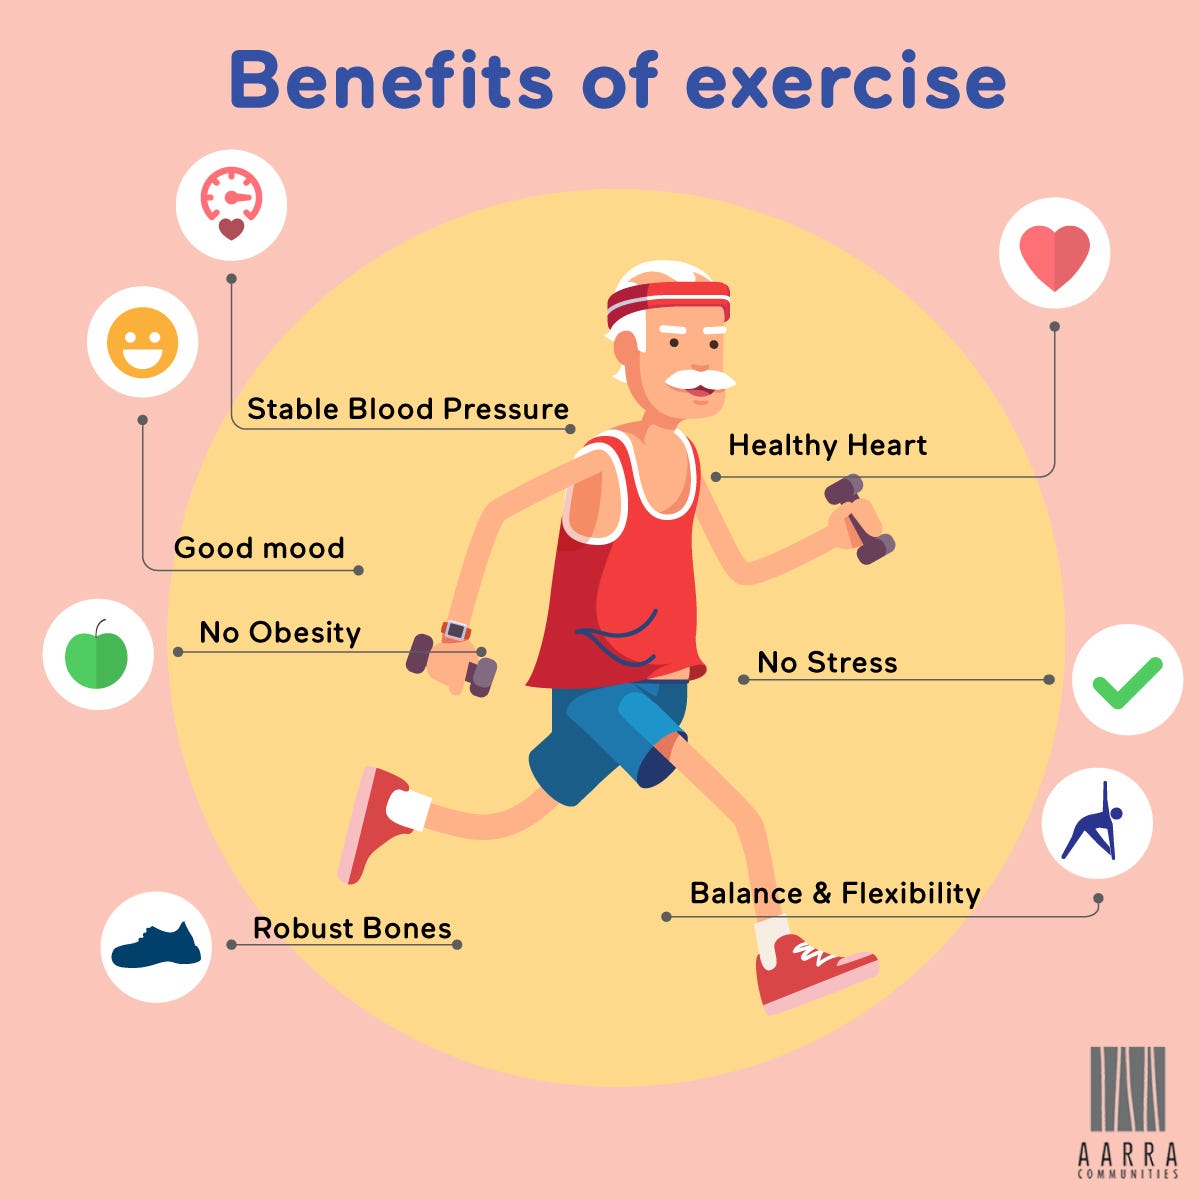 Part of my life. Exercises по теме Health. Упражнения по теме Health. Health benefits of exercise. Физическая активность инфографика.